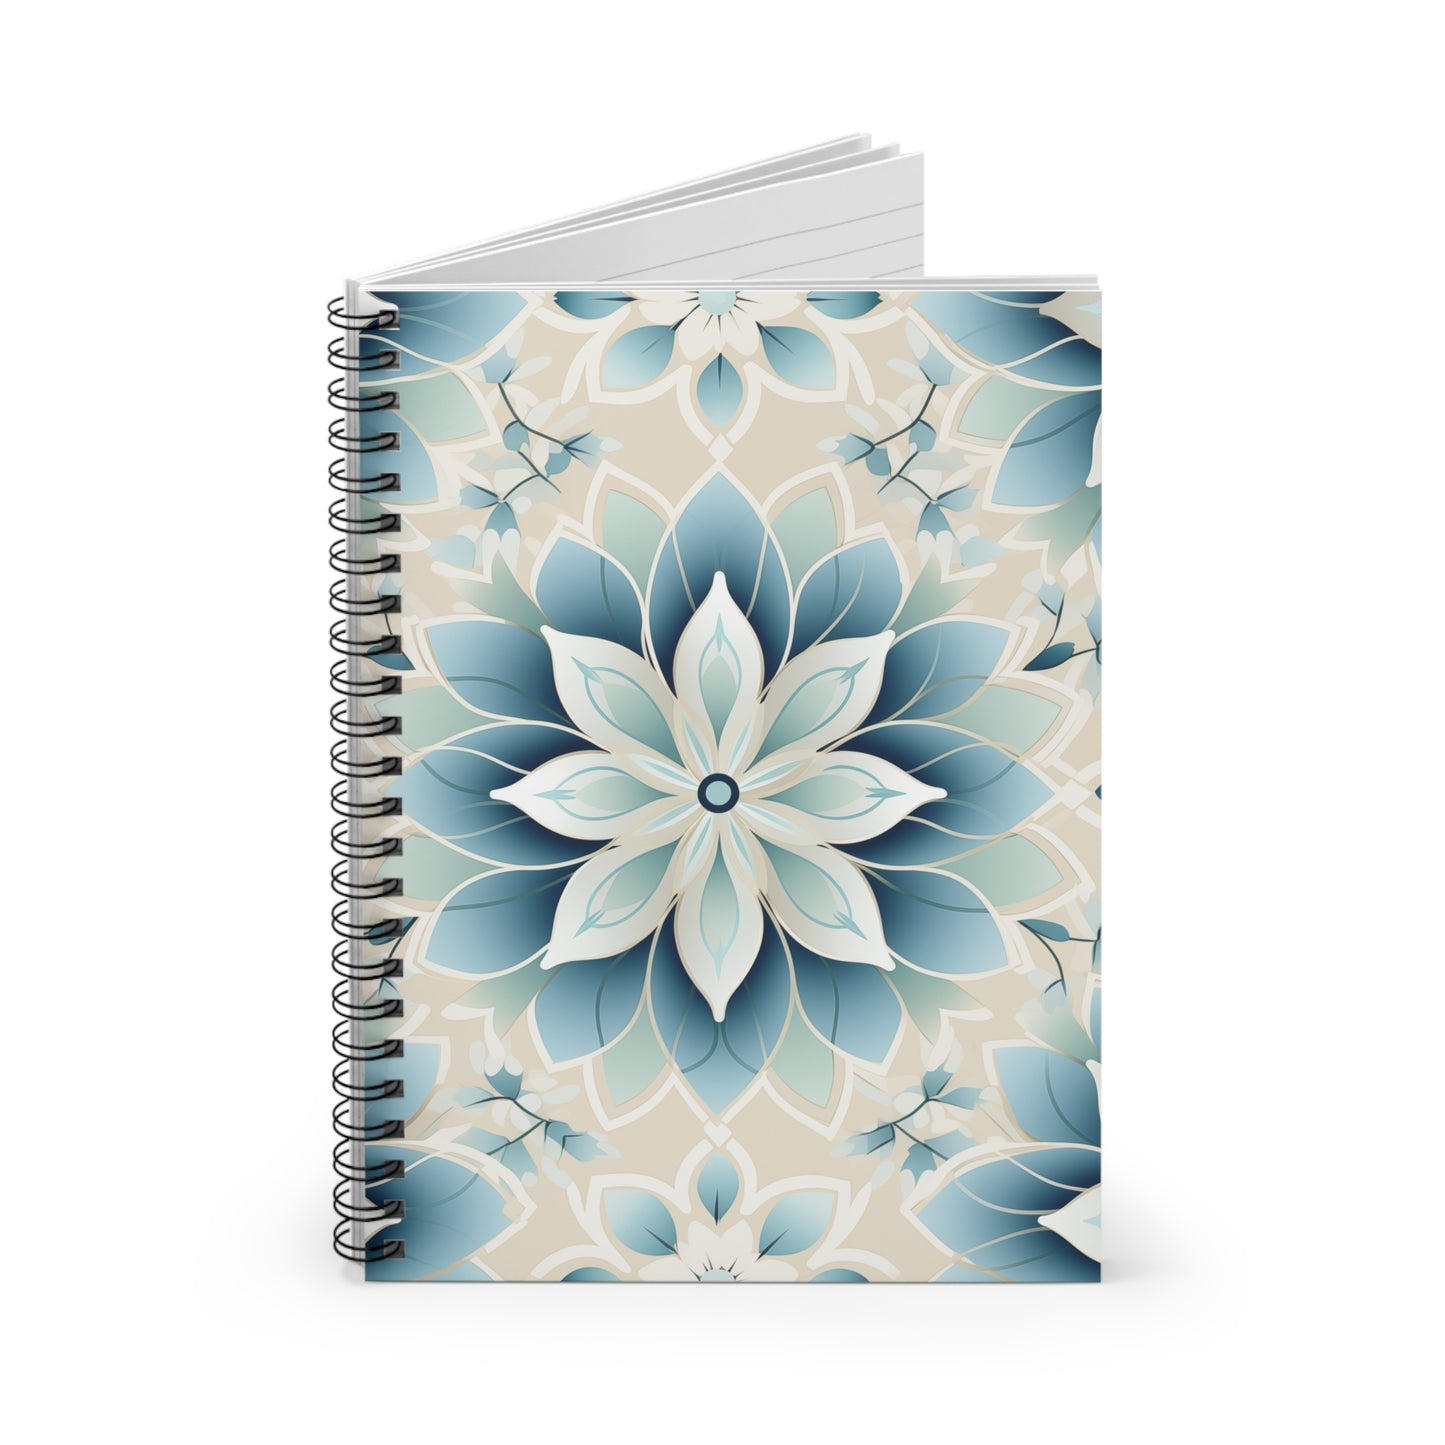 "Blue Lotus" Spiral Notebook - Ruled Line